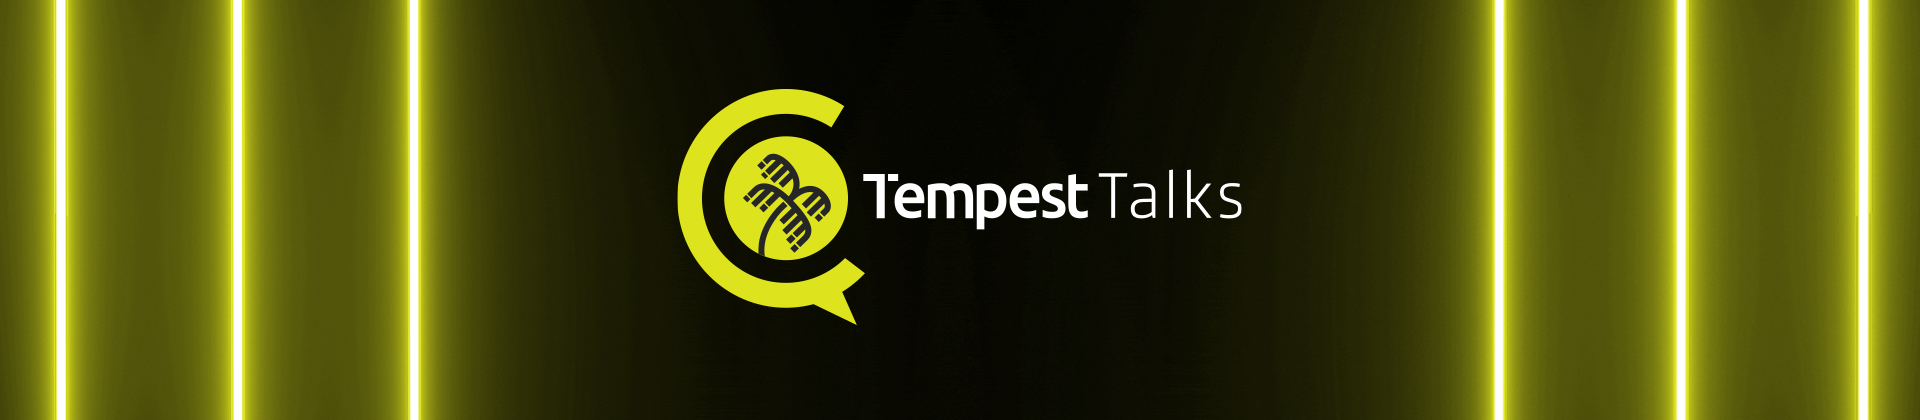 tempest talk